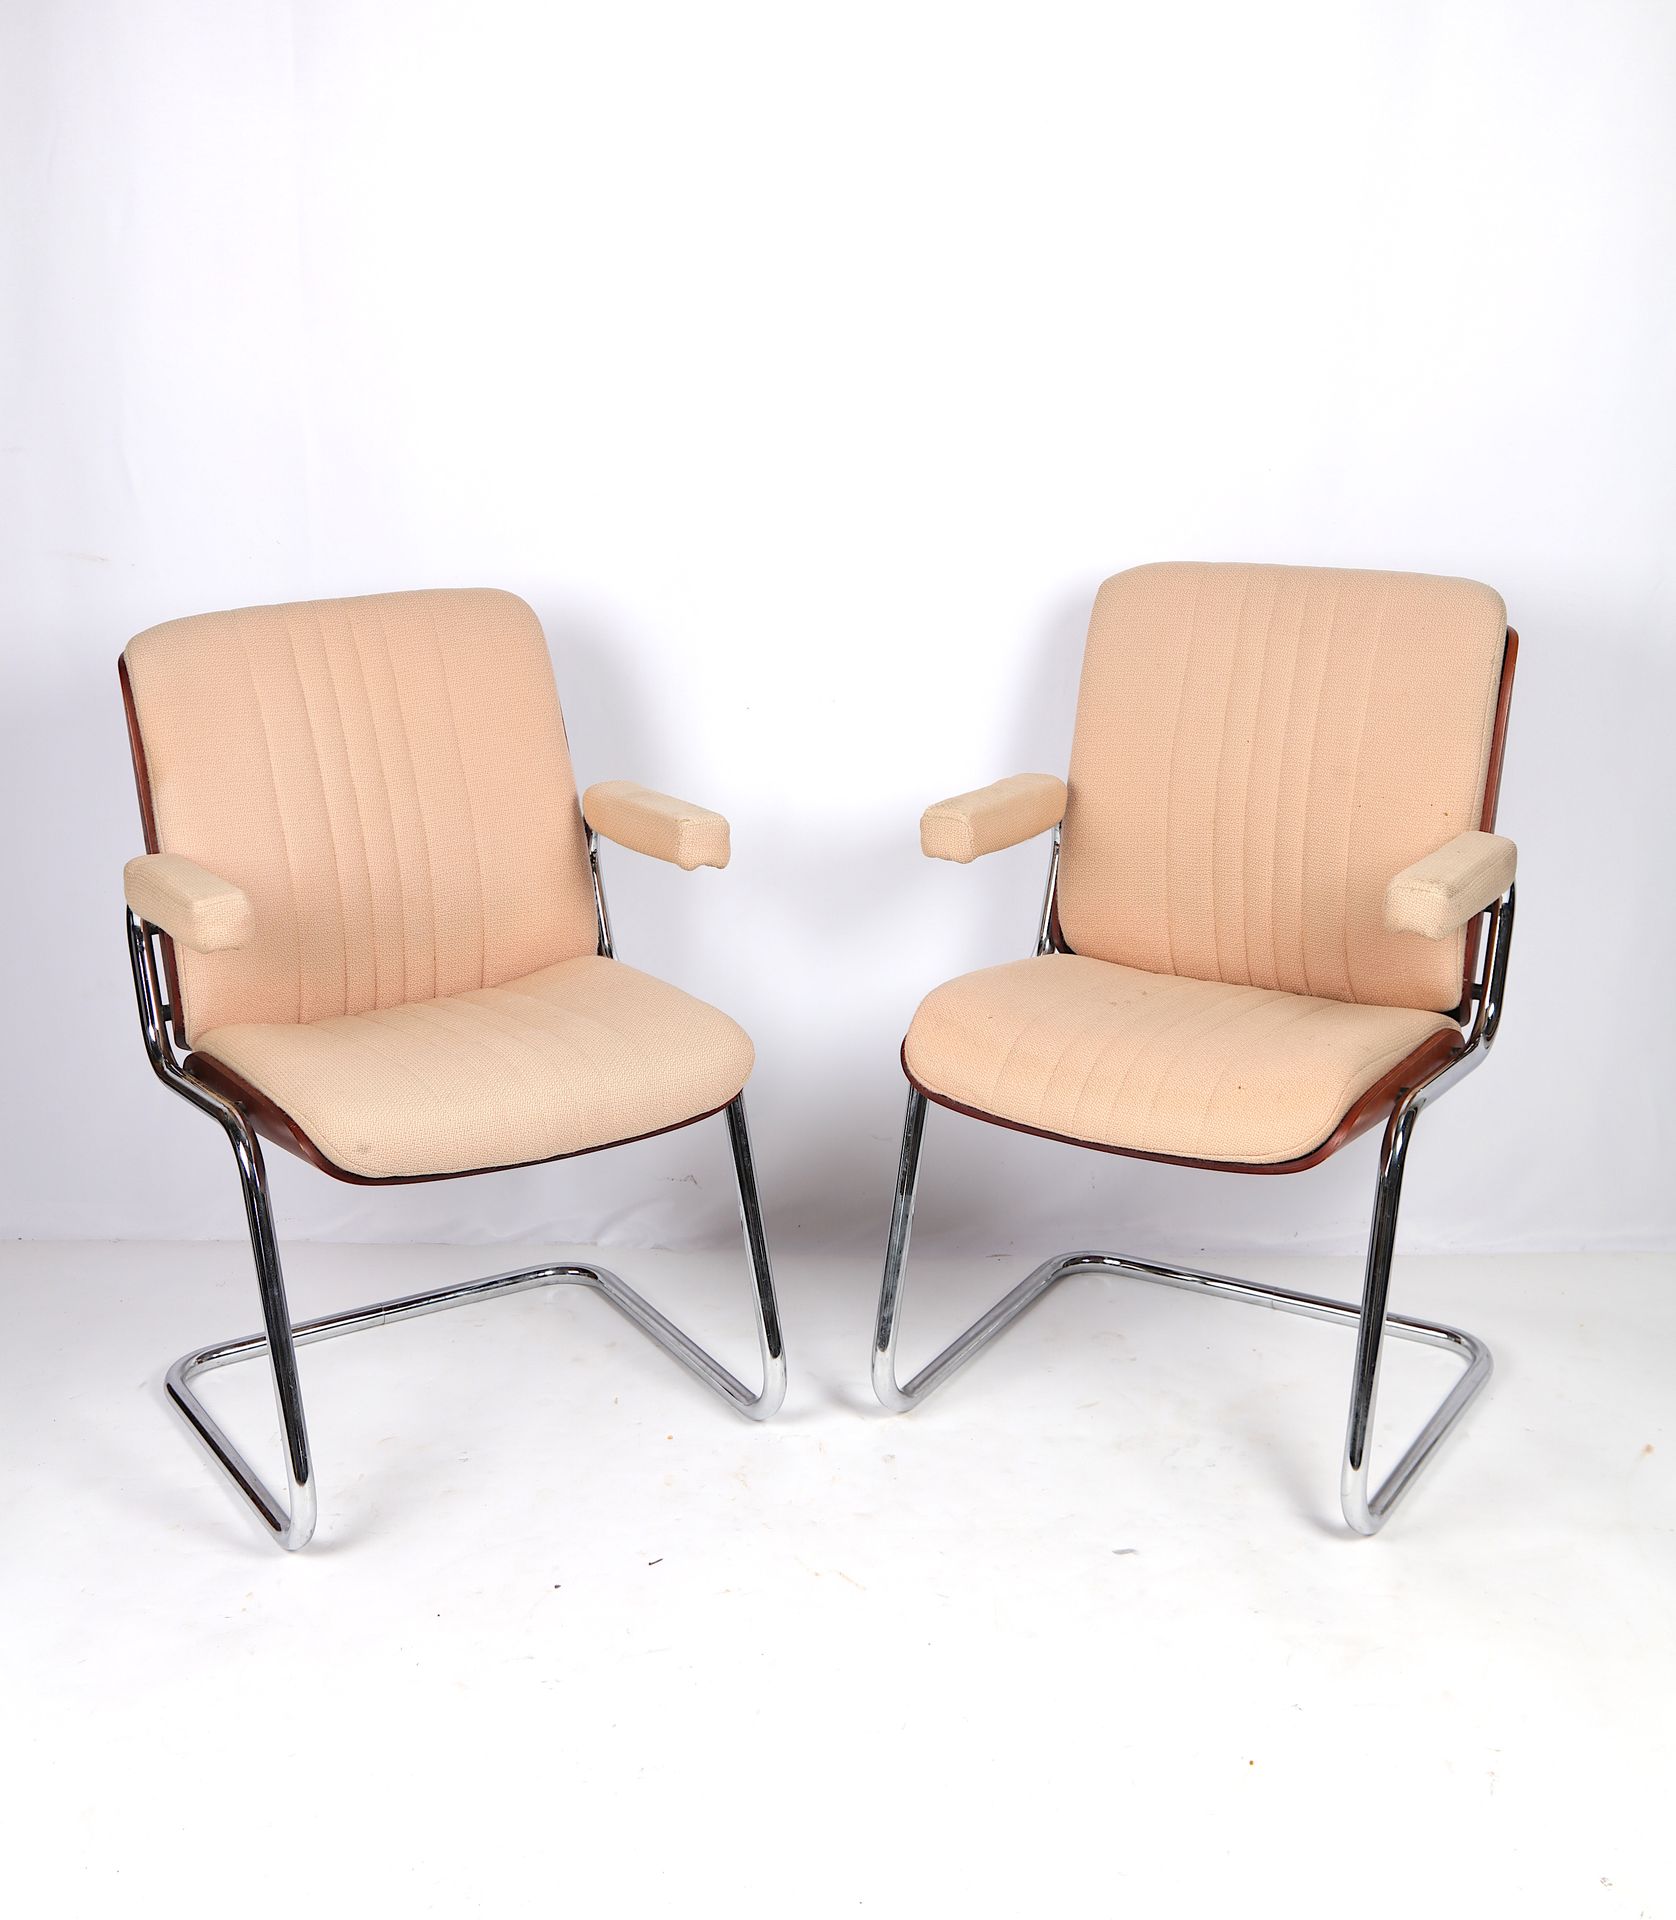 Null 卡尔-迪特特，出版商马丁-斯托尔，一对天然木材和米色织物装饰的层压扶手椅（有些轻度污渍）。关于1970年